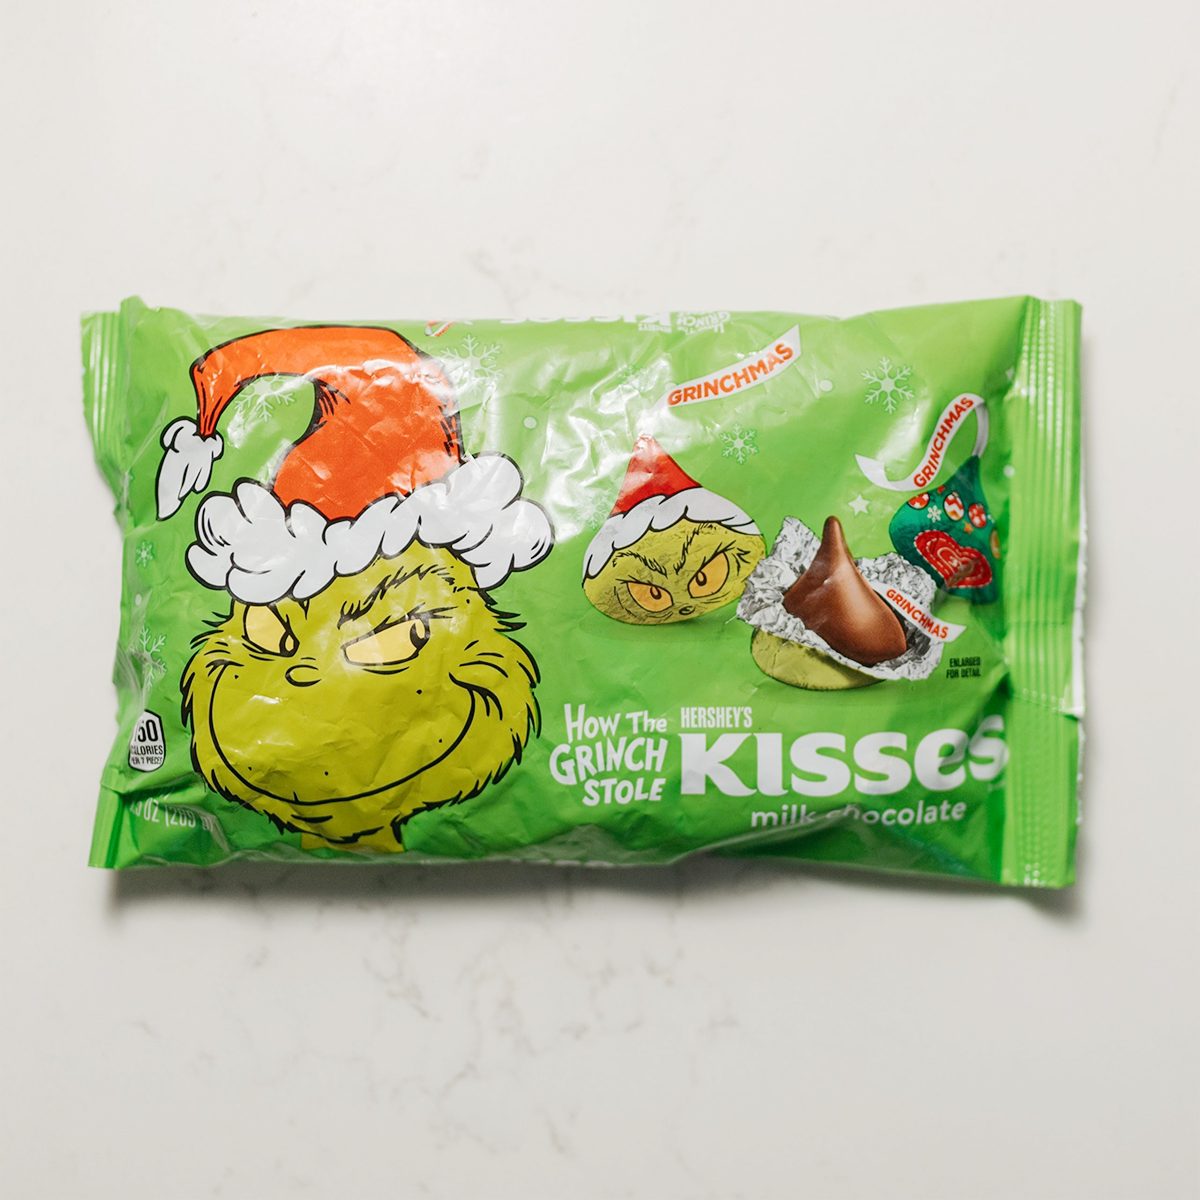 20 Best Christmas Snacks to Buy This Year | Taste of Home